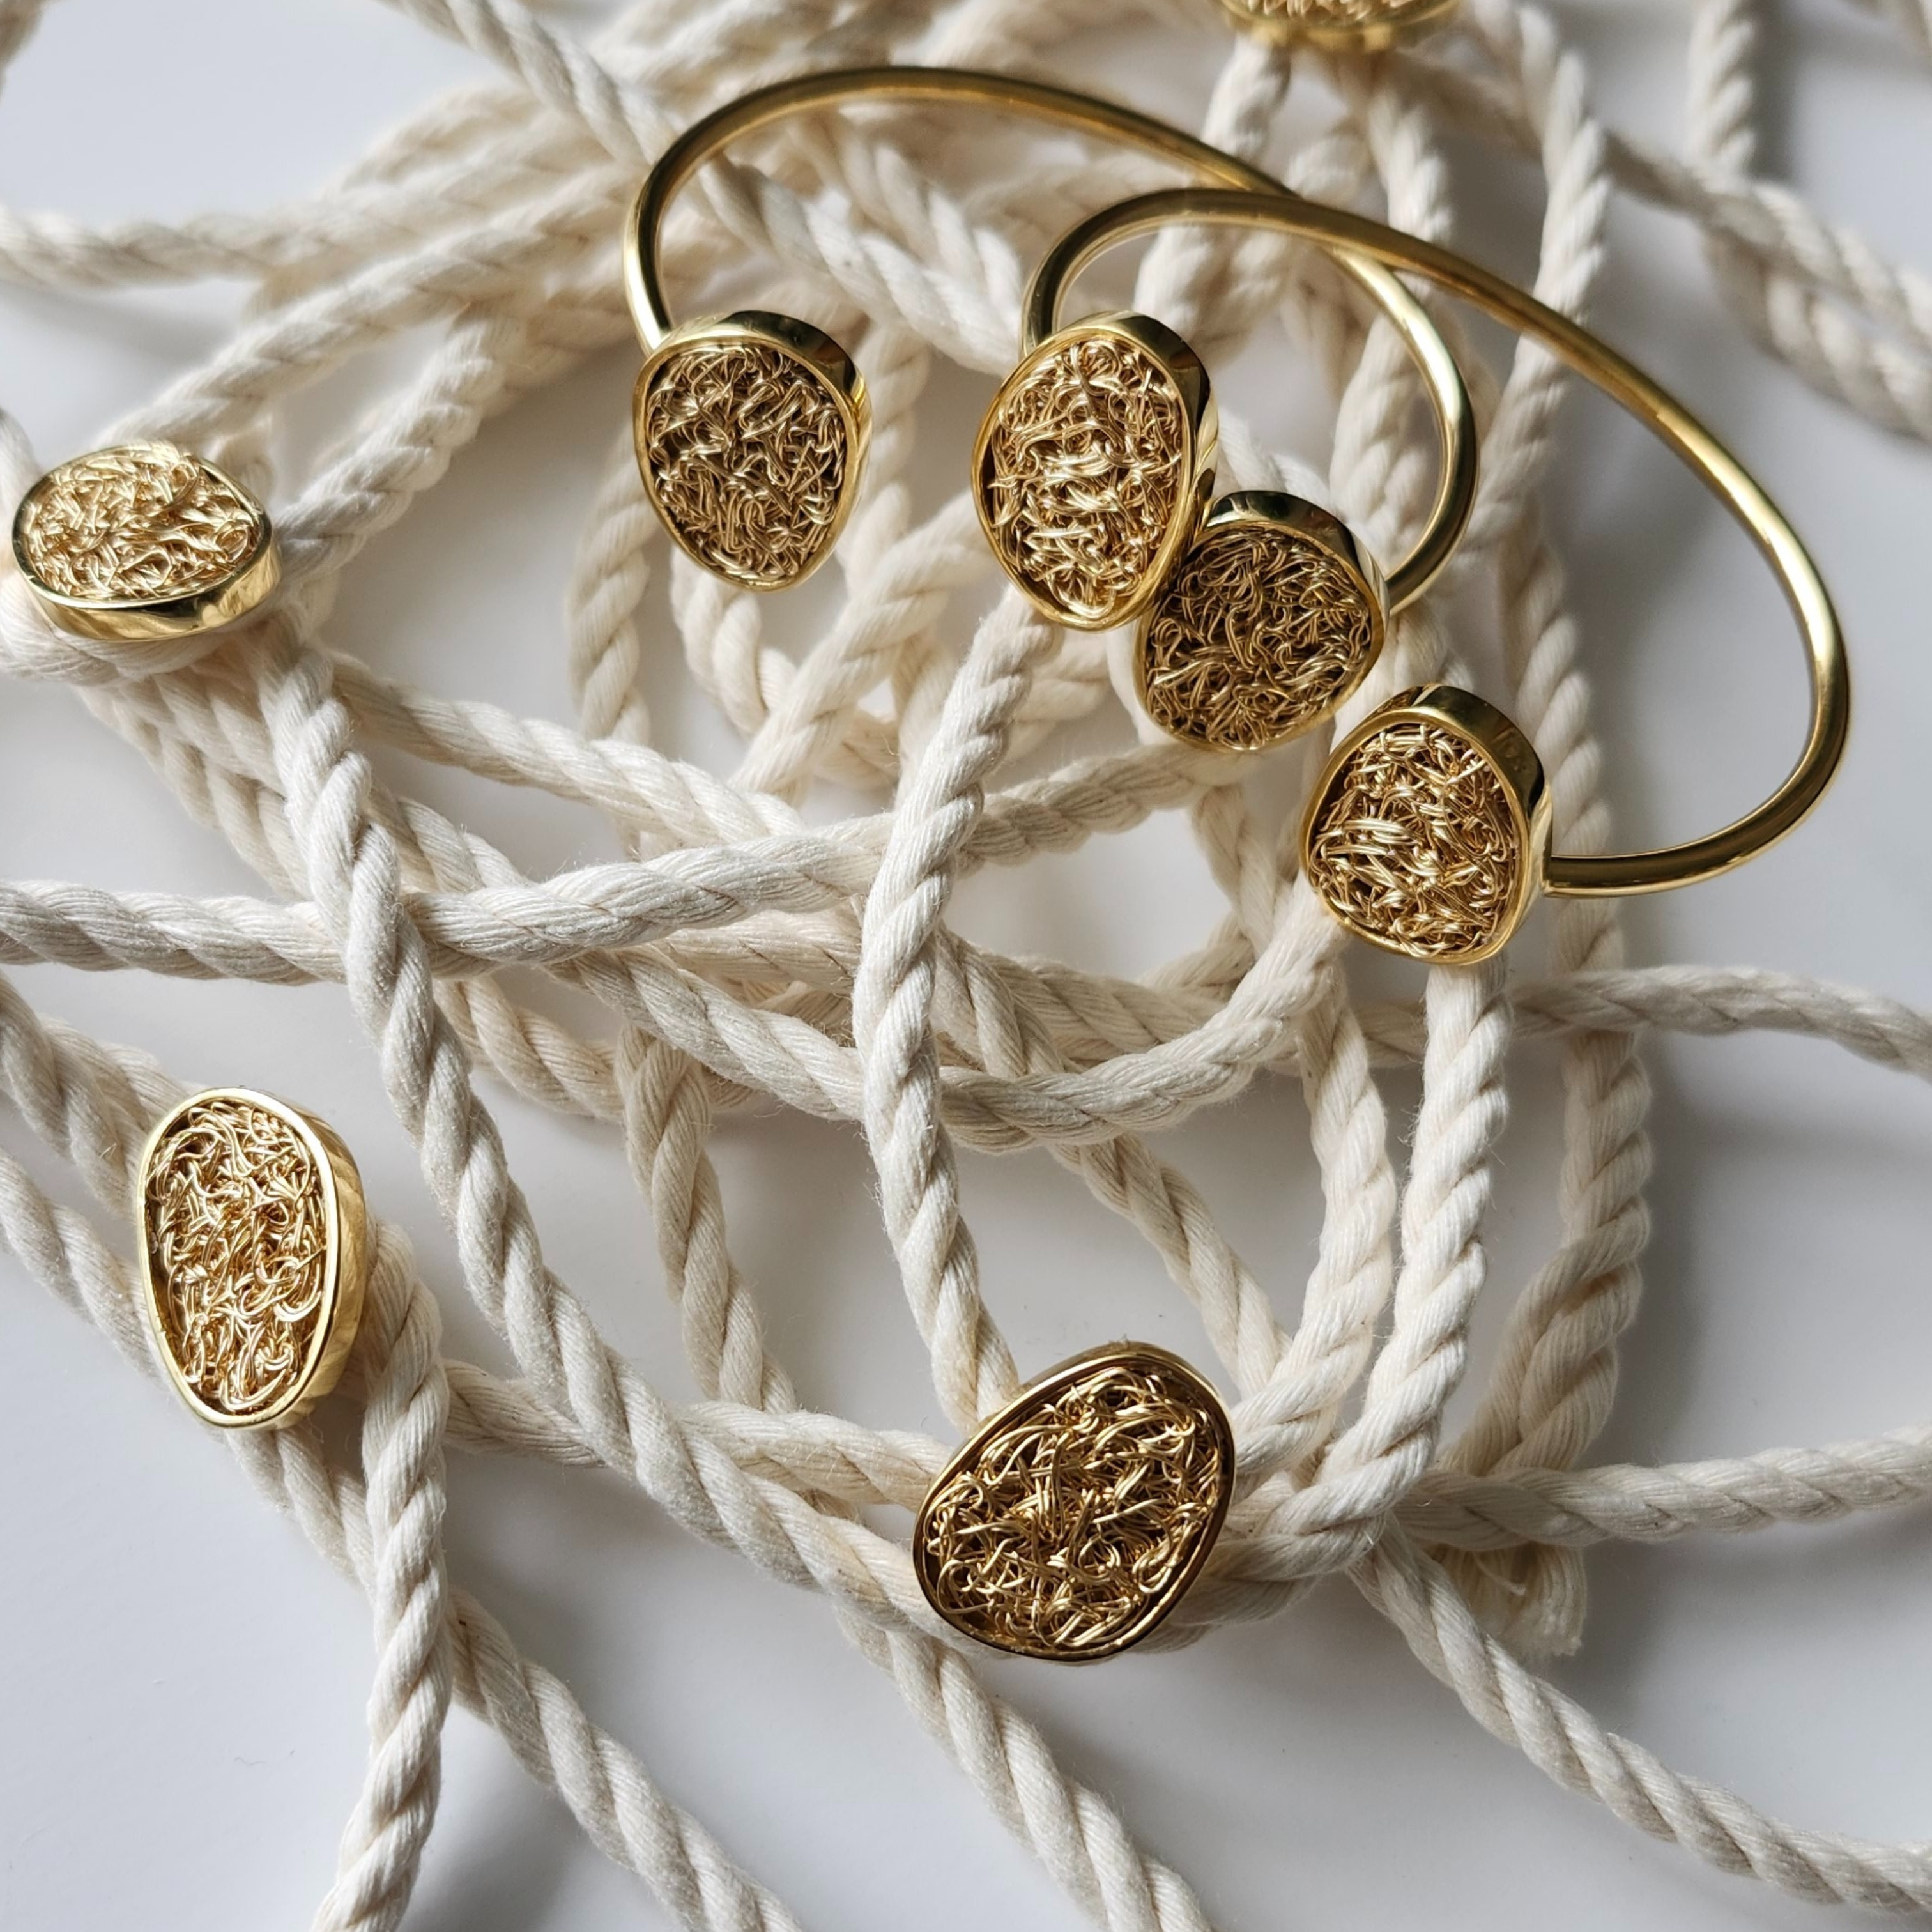 hand made gold bangle bracelets with crochet details